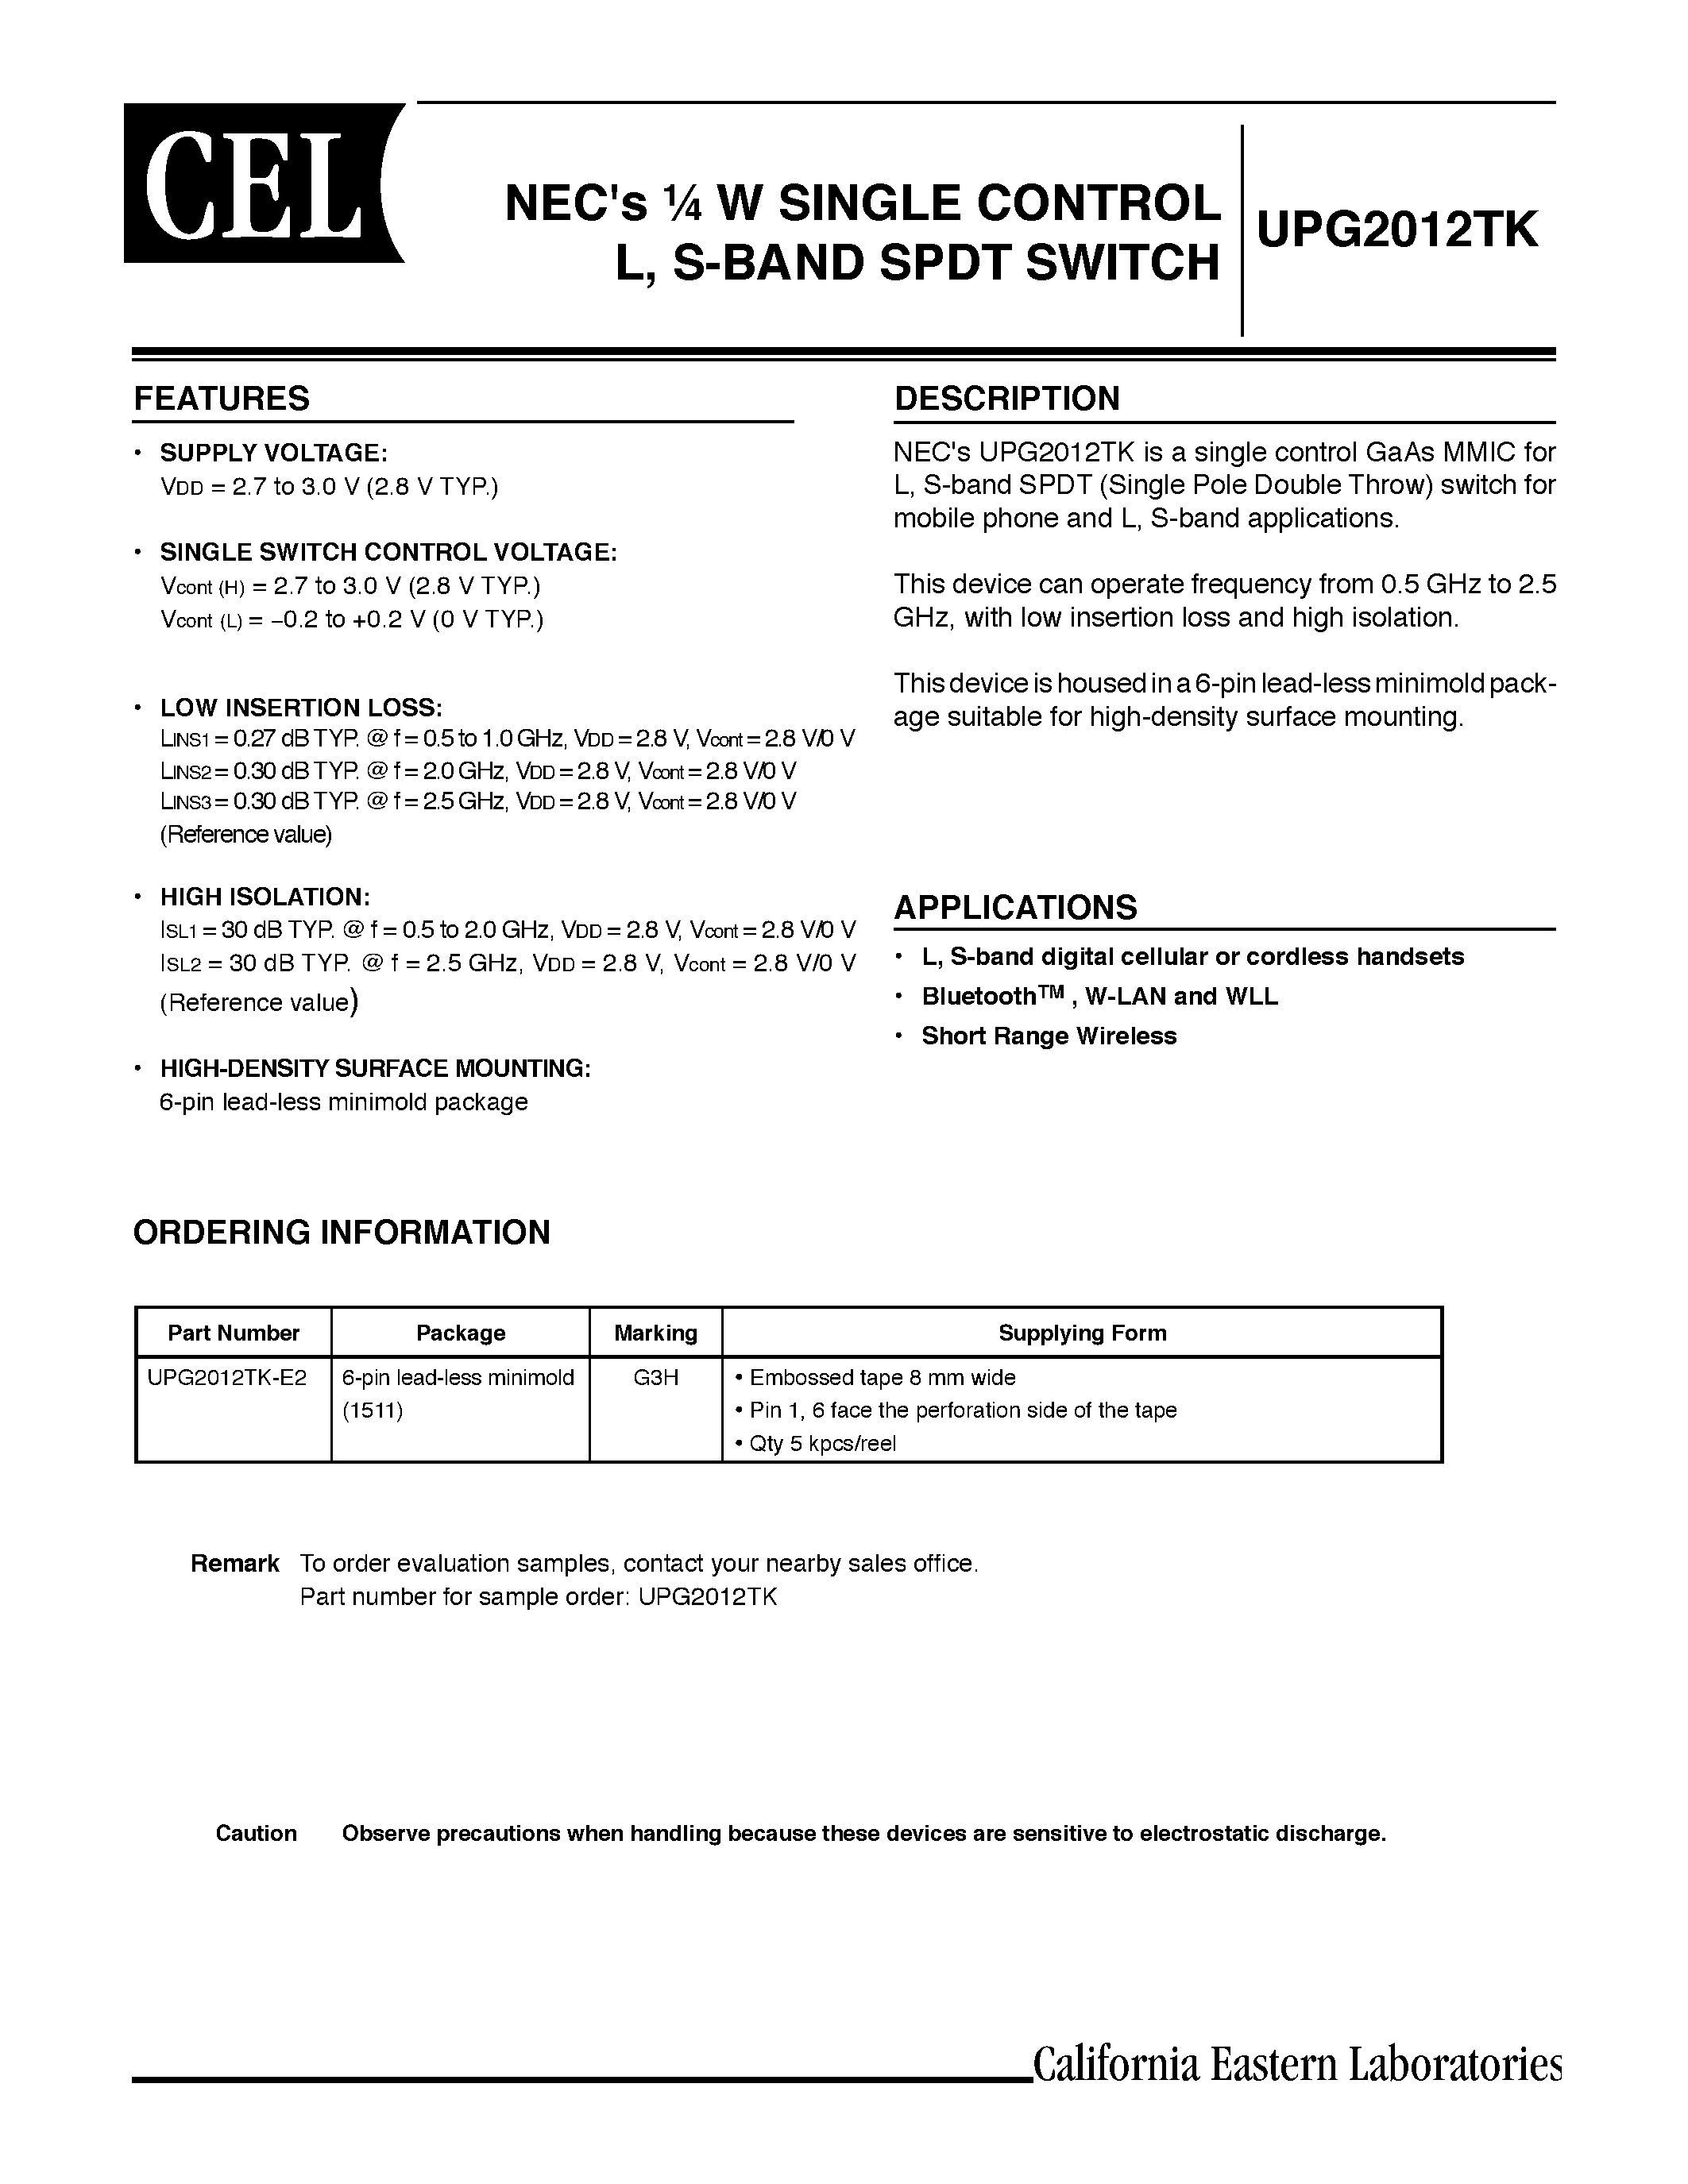 Datasheet UPG2012TK-E2 - NECs W SINGLE CONTROL L/ S-BAND SPDT SWITCH page 1